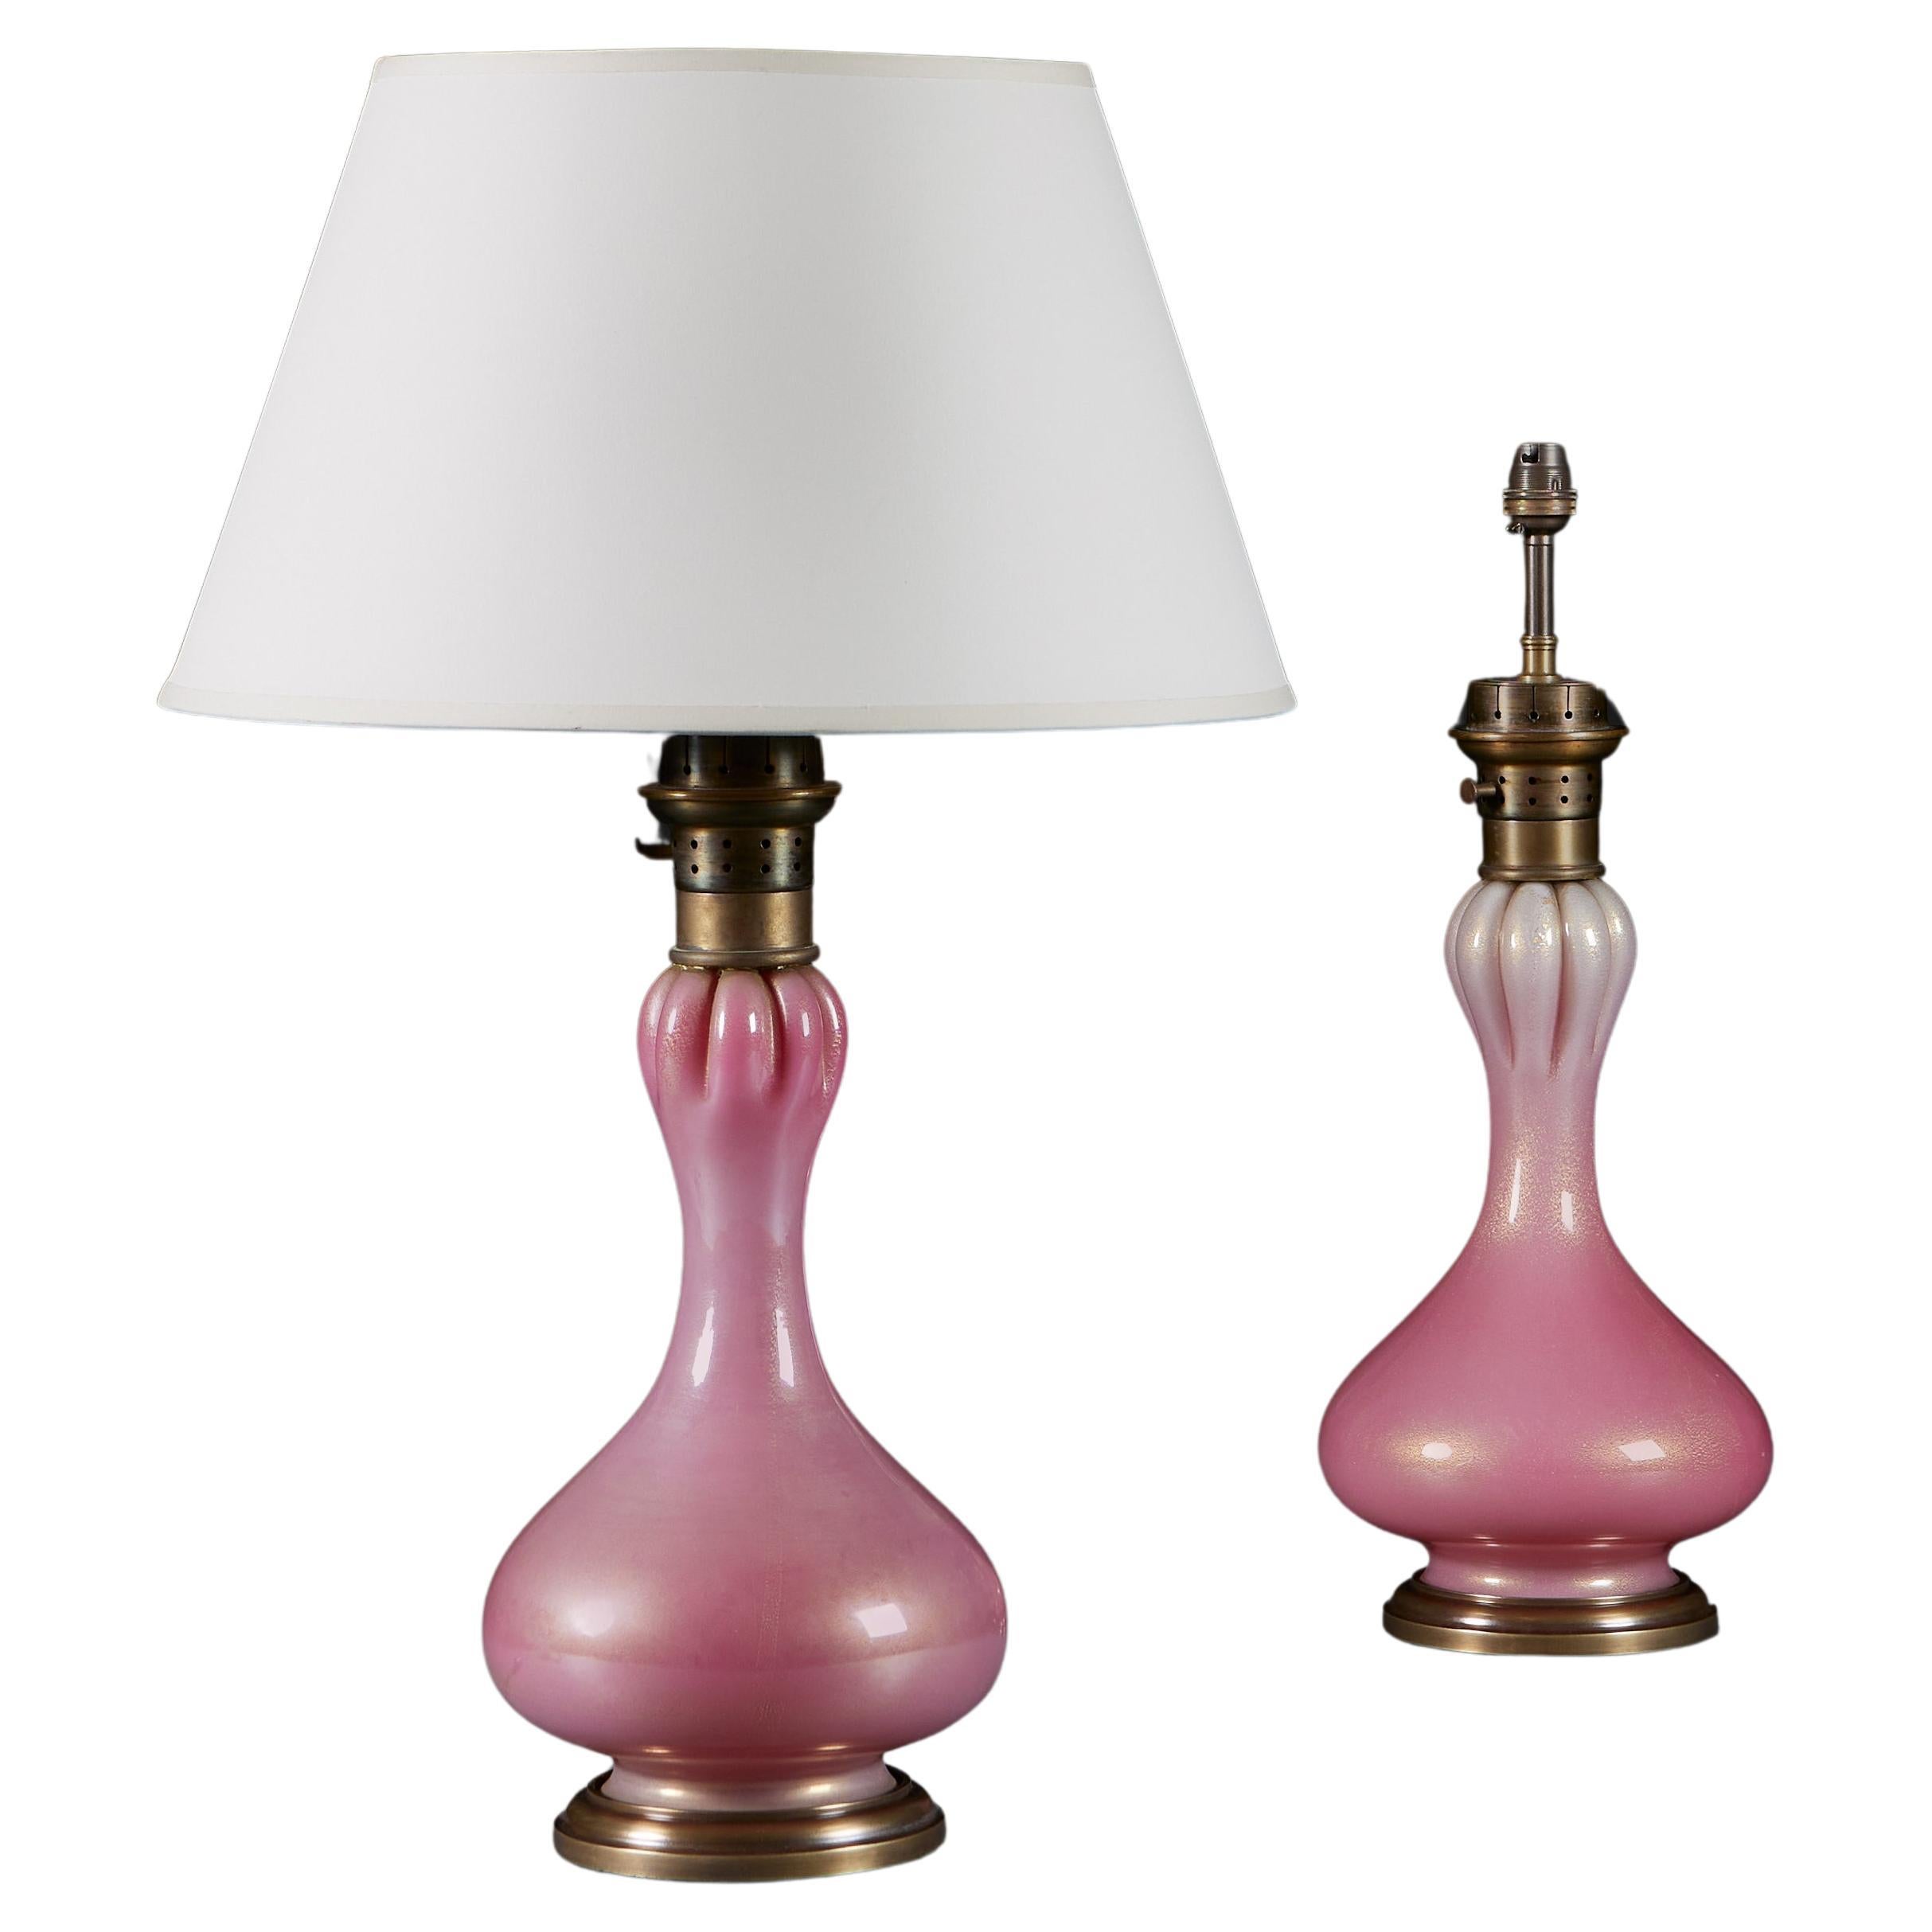 Paire de lampes roses en verre de Murano par Seguso 